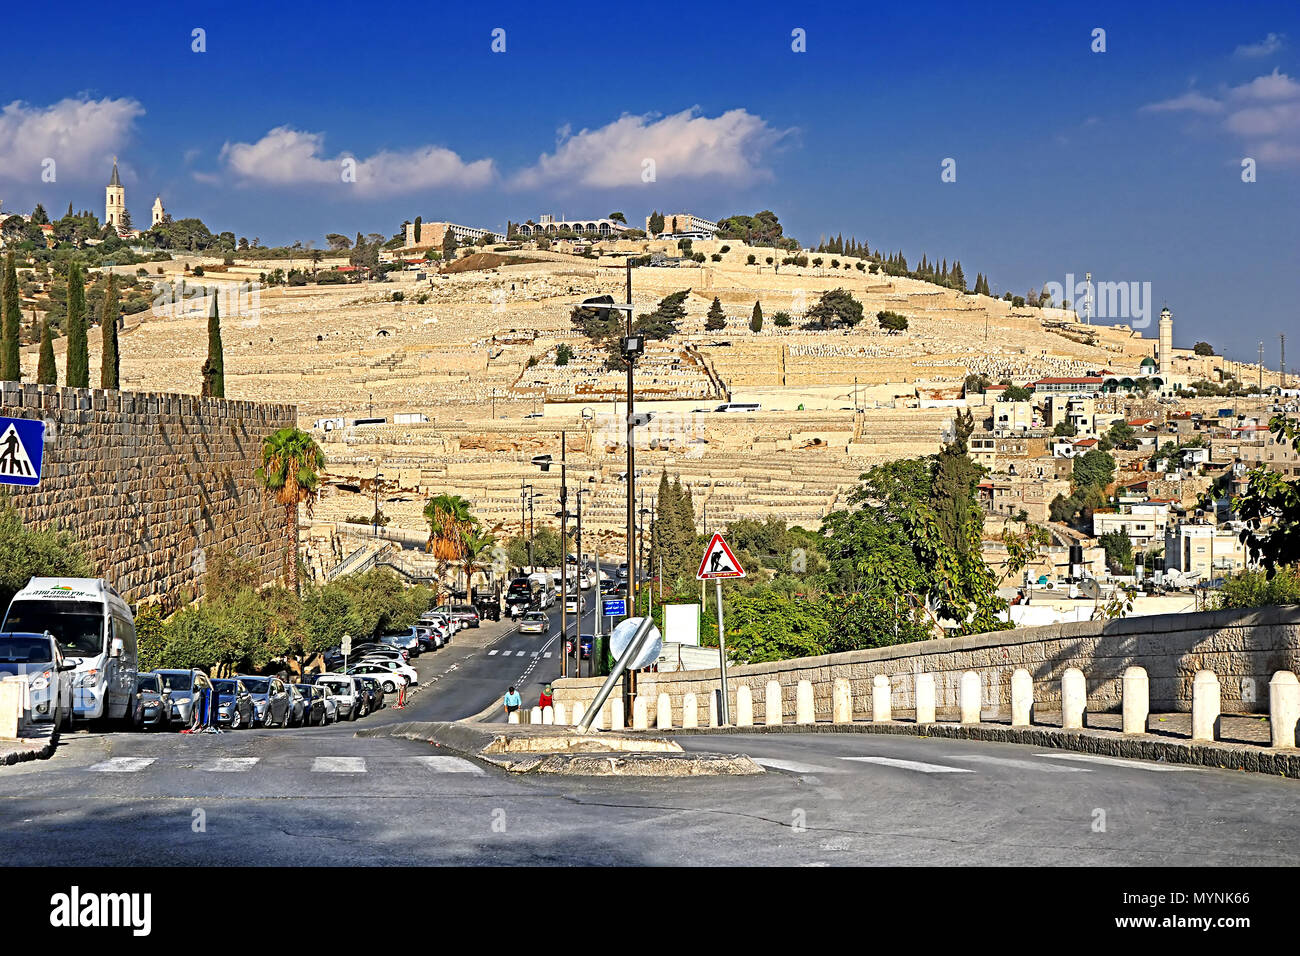 Gerusalemme, Israele - 20 settembre 2017: Vista della città di Gerusalemme e sul traffico Ma'ale HaShalom street, Israele Foto Stock